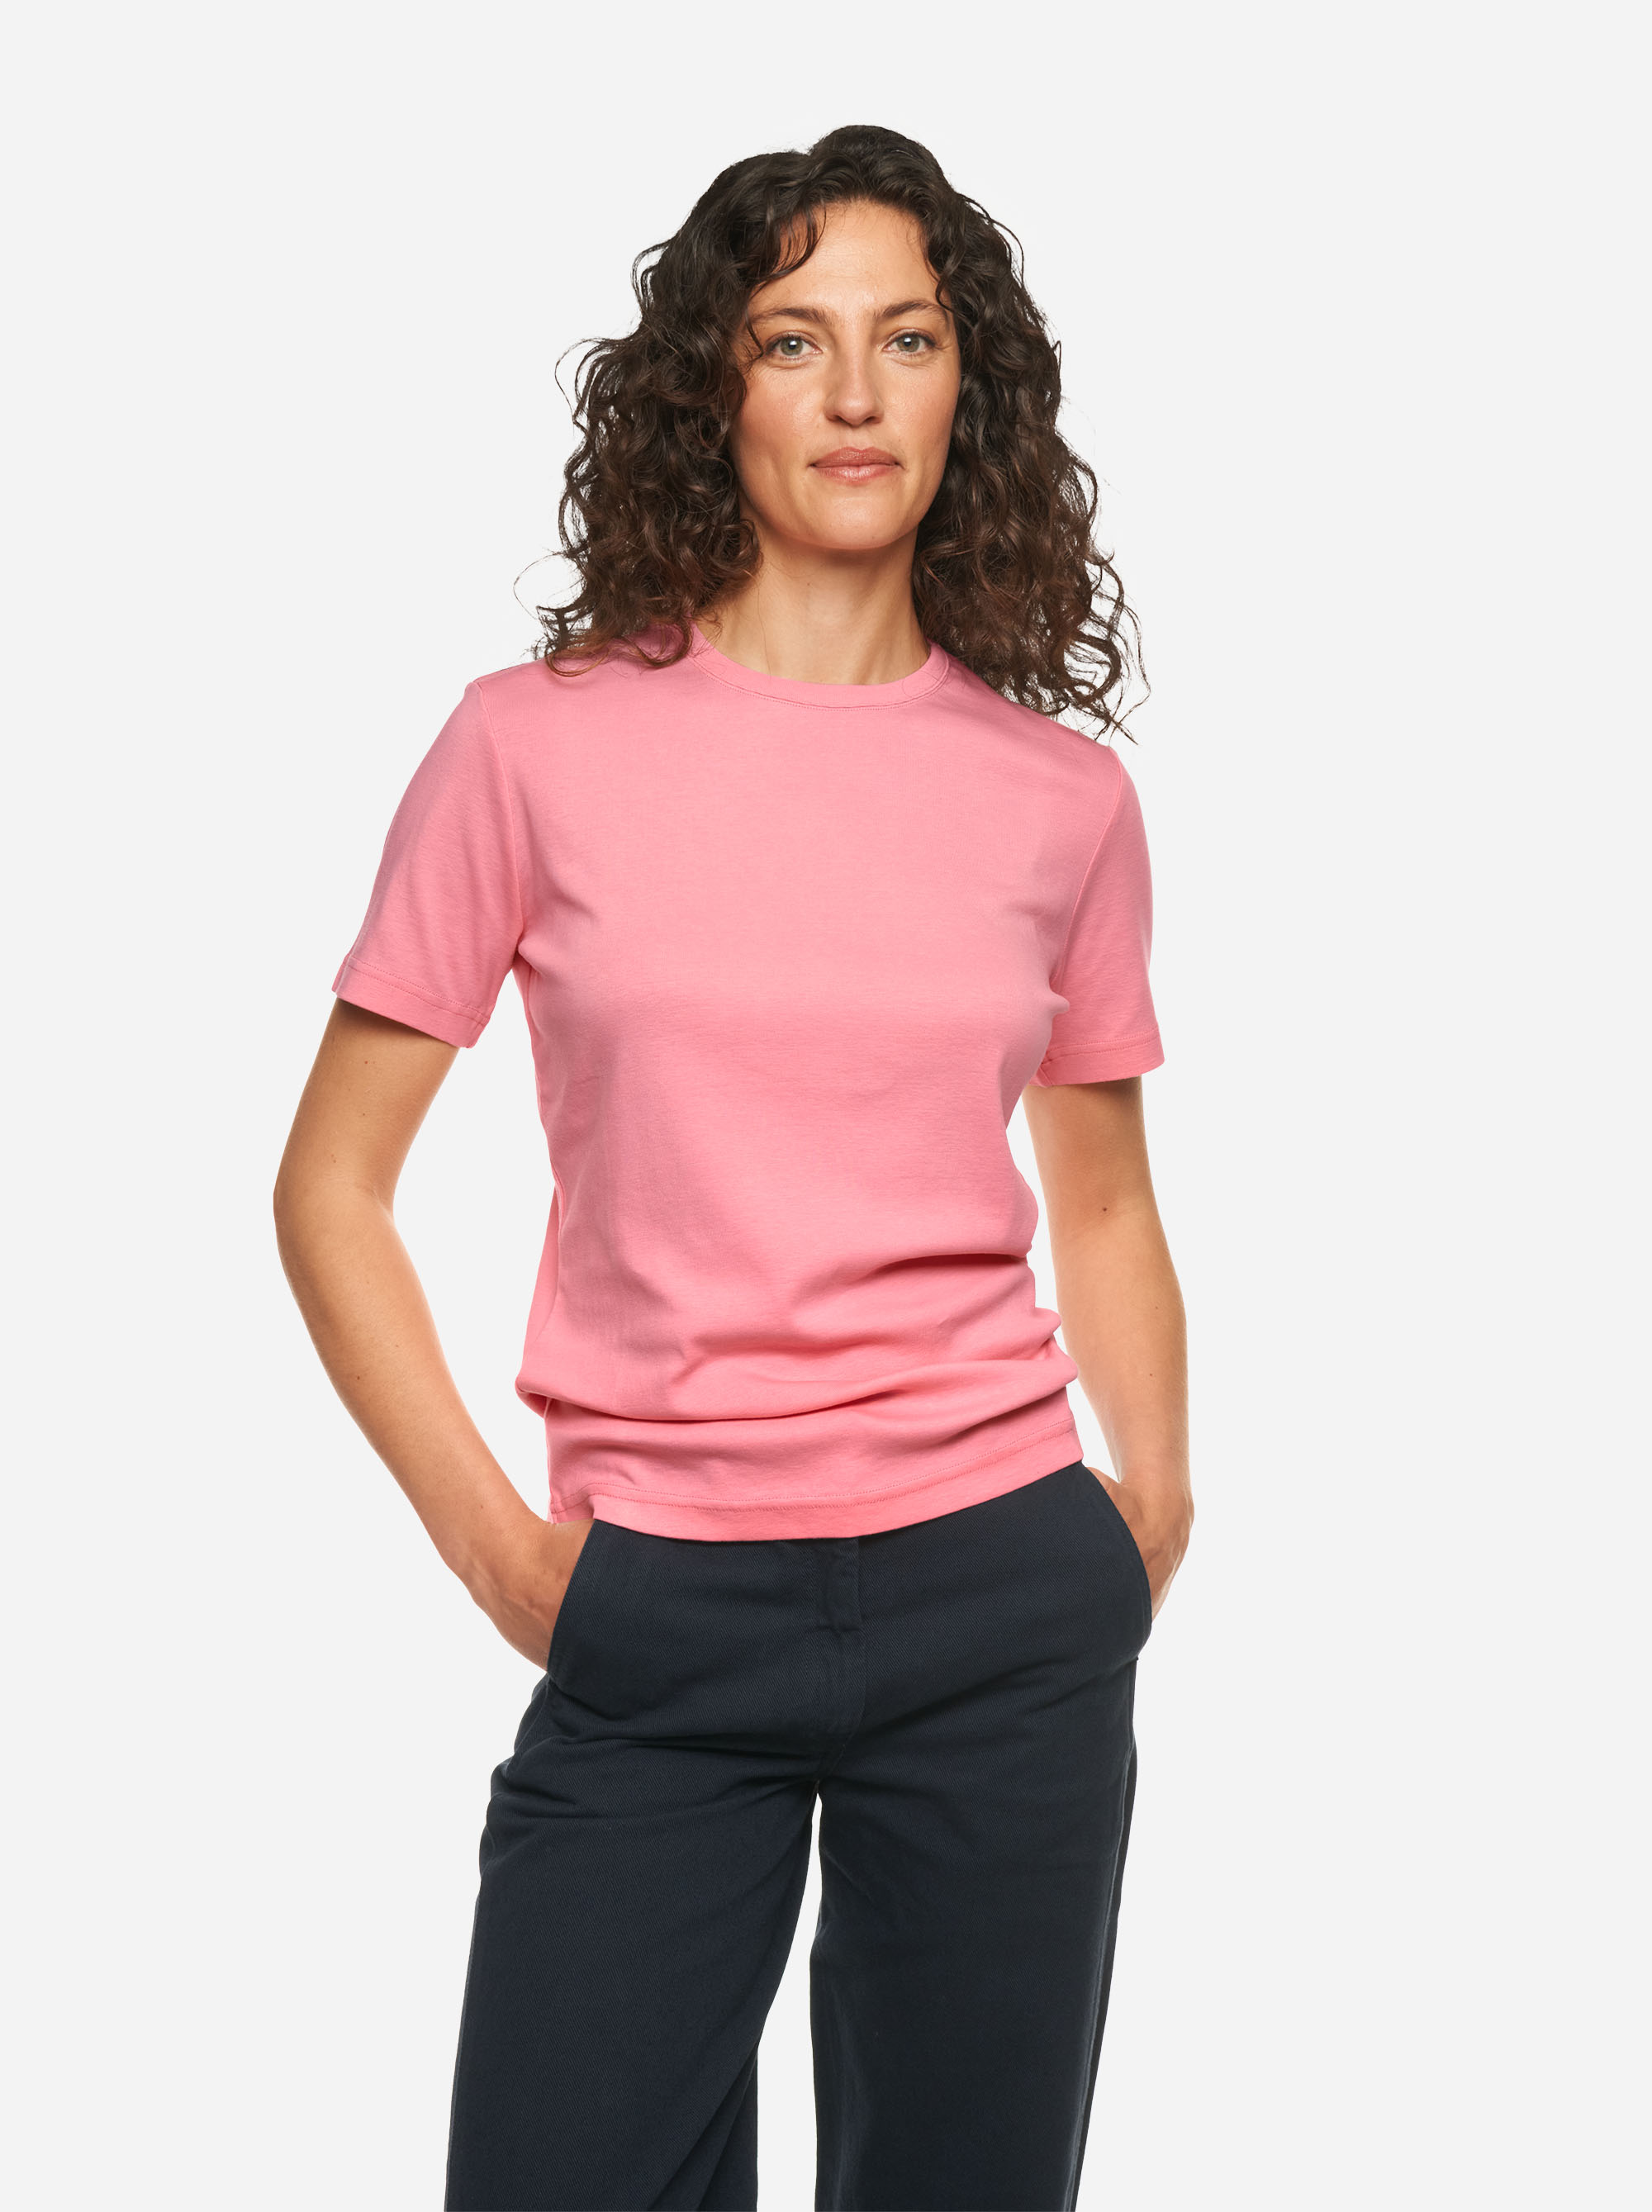 Teym - The T-Shirt - Women - Pink - 1